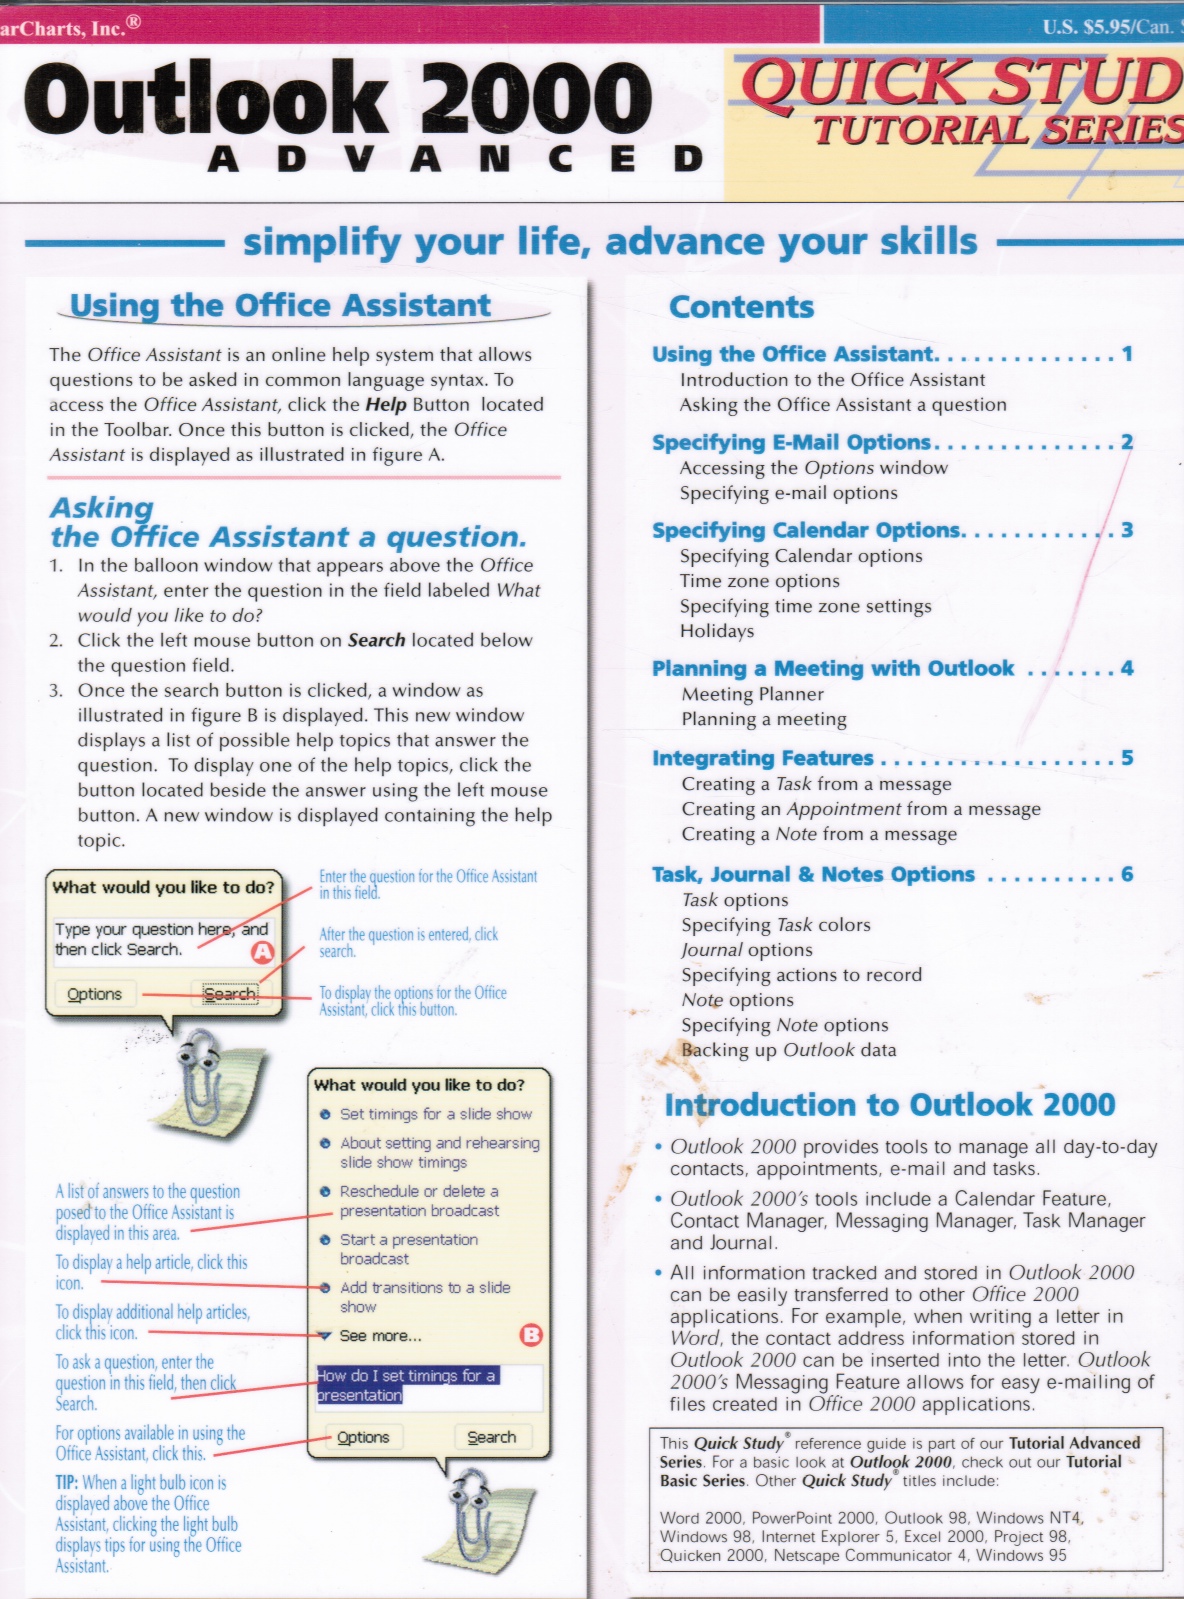 ARNOLD, DARRYL - Outlook 2000 Advanced Quick Study Tutorial Series